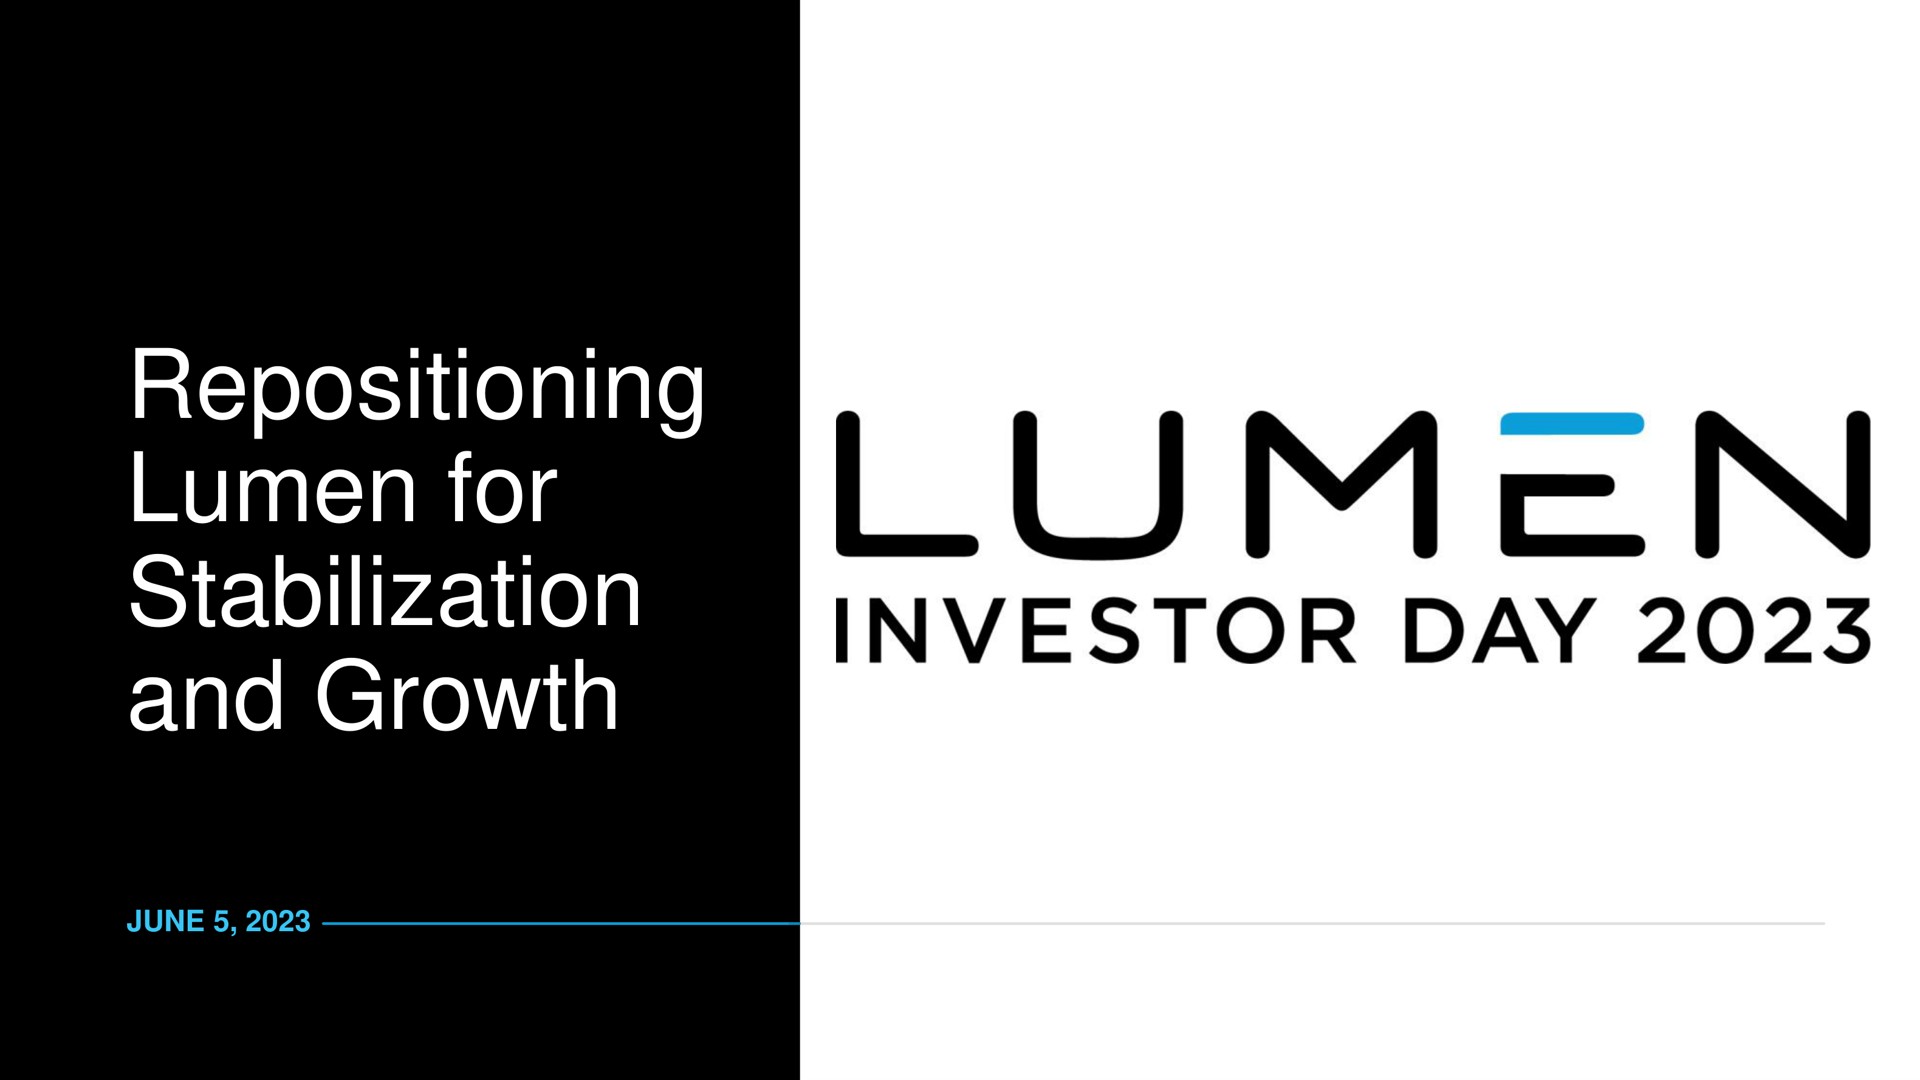 repositioning lumen for stabilization and growth investor day | Lumen